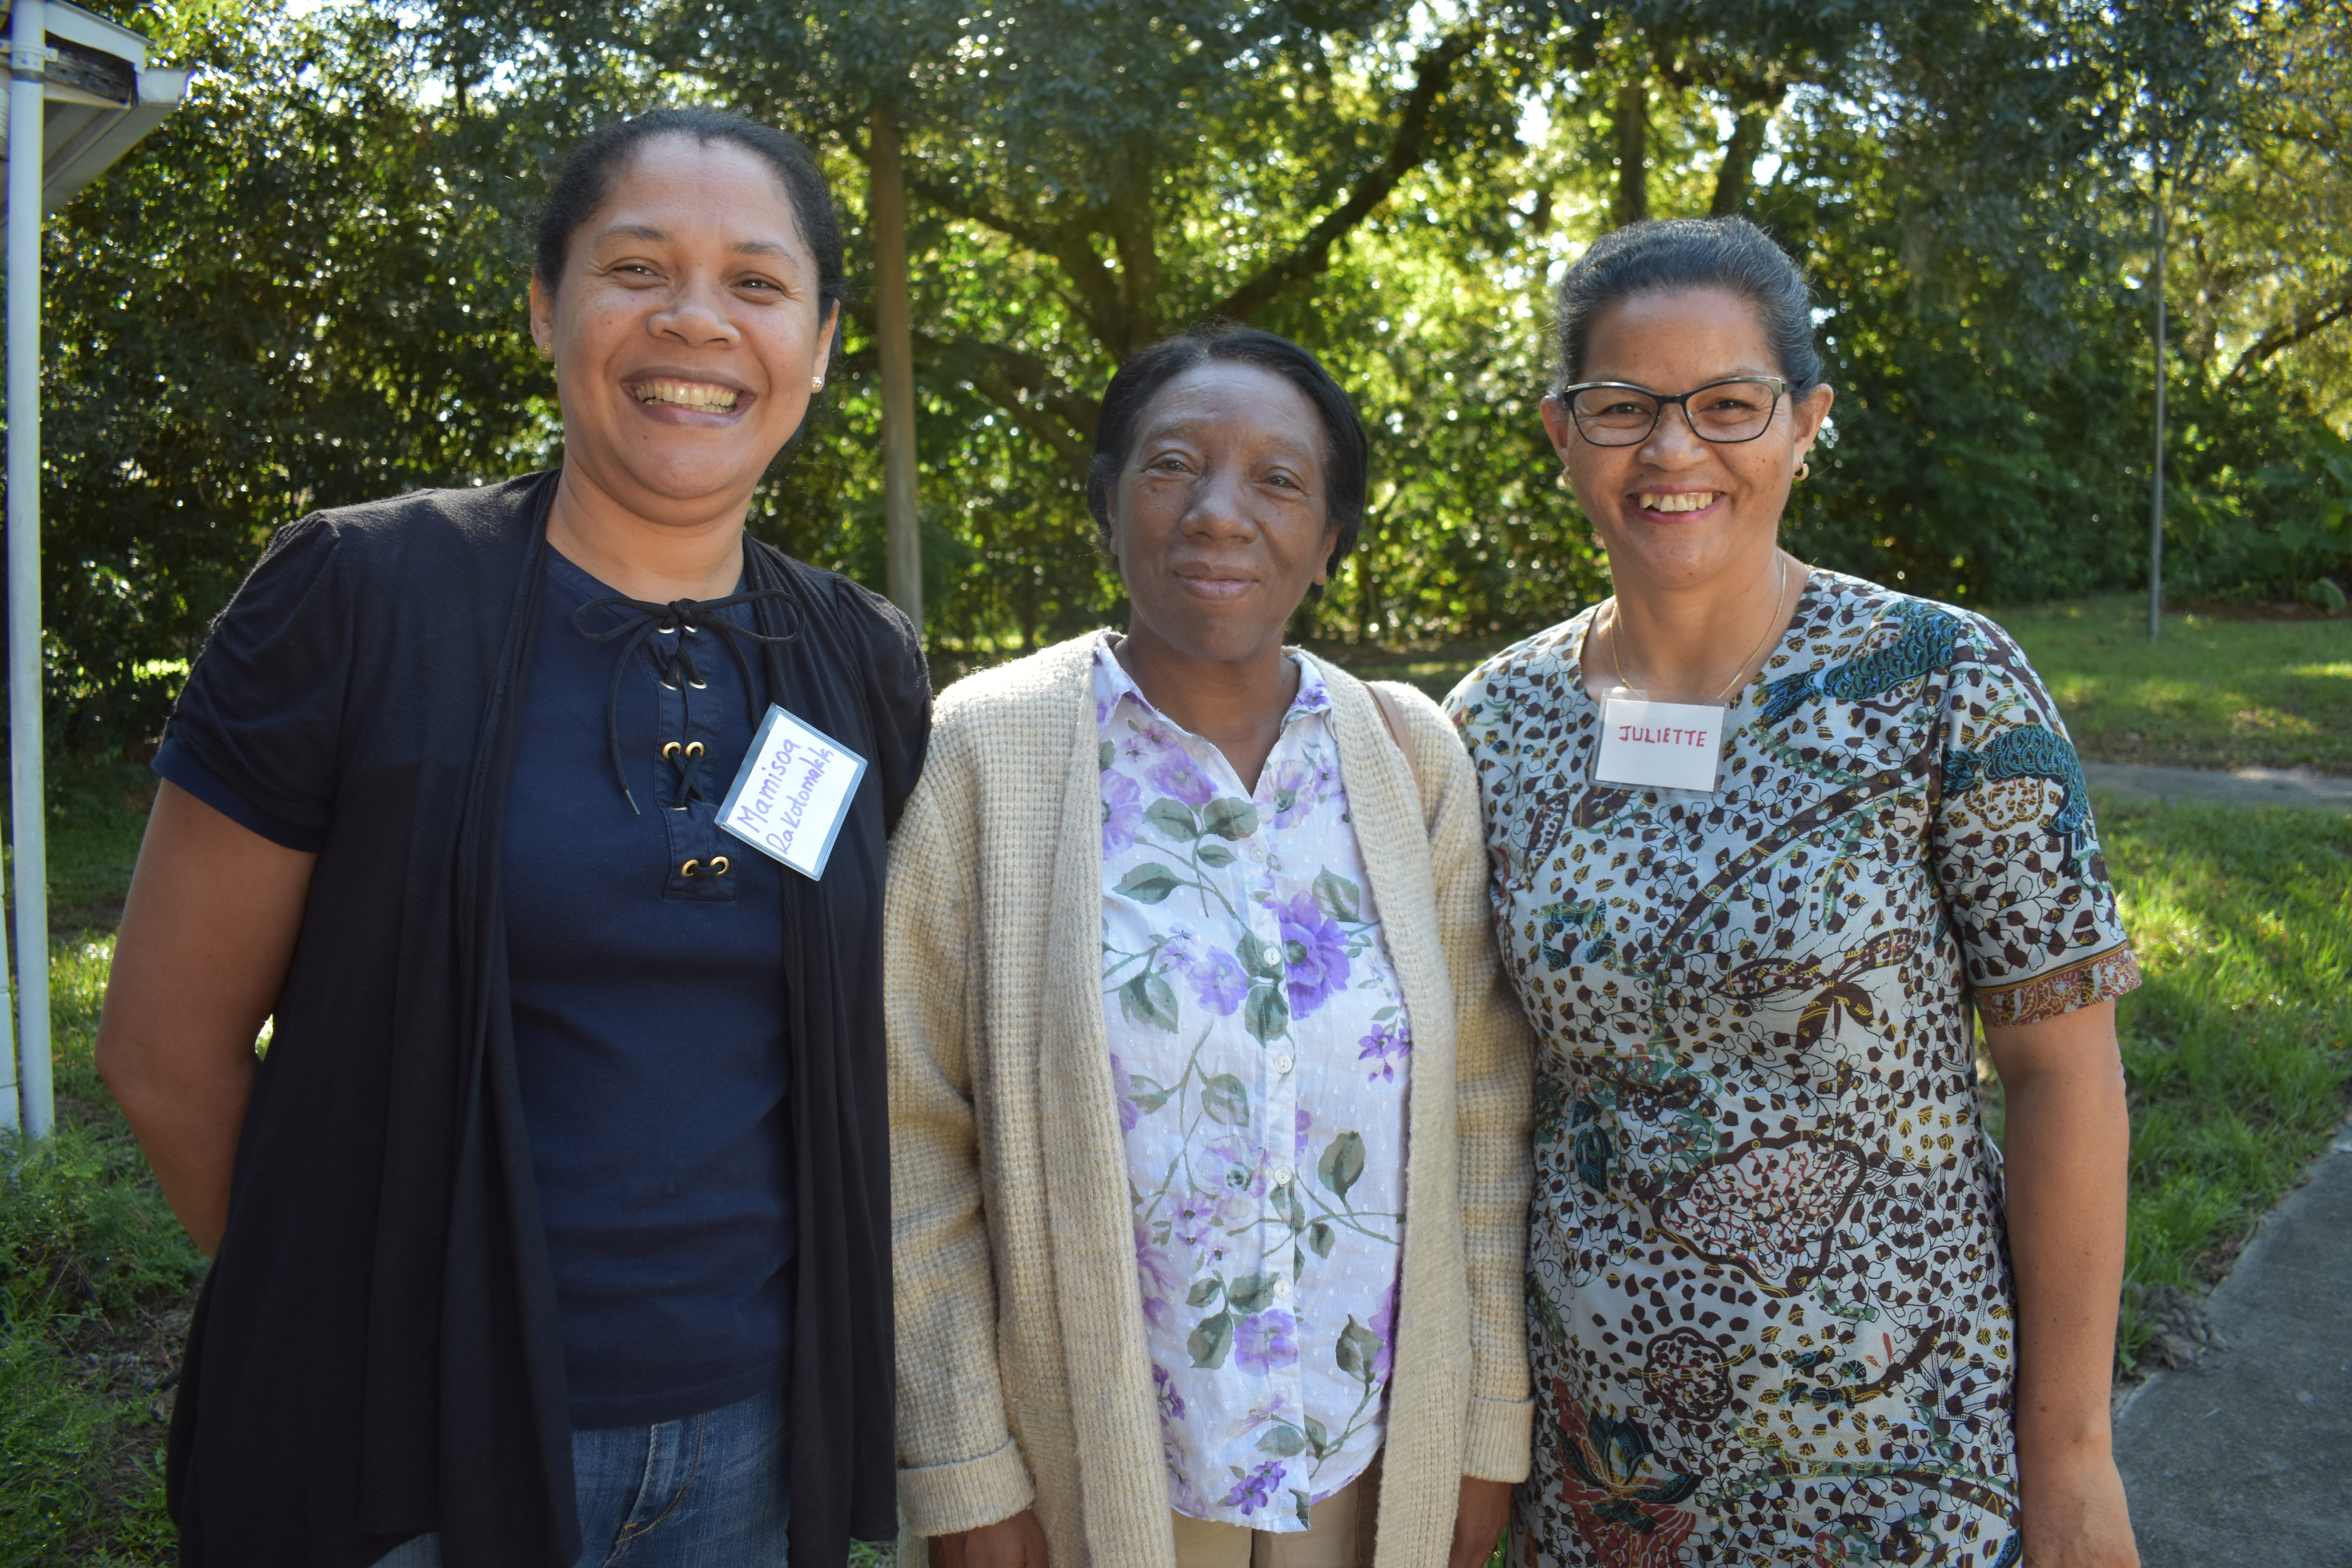 Three FJKM pastors Mamisoa Rakotomalala, Perline Cooper, and Juliette Razafiarisoa (from left to right) at the 2019 MMN Conference.